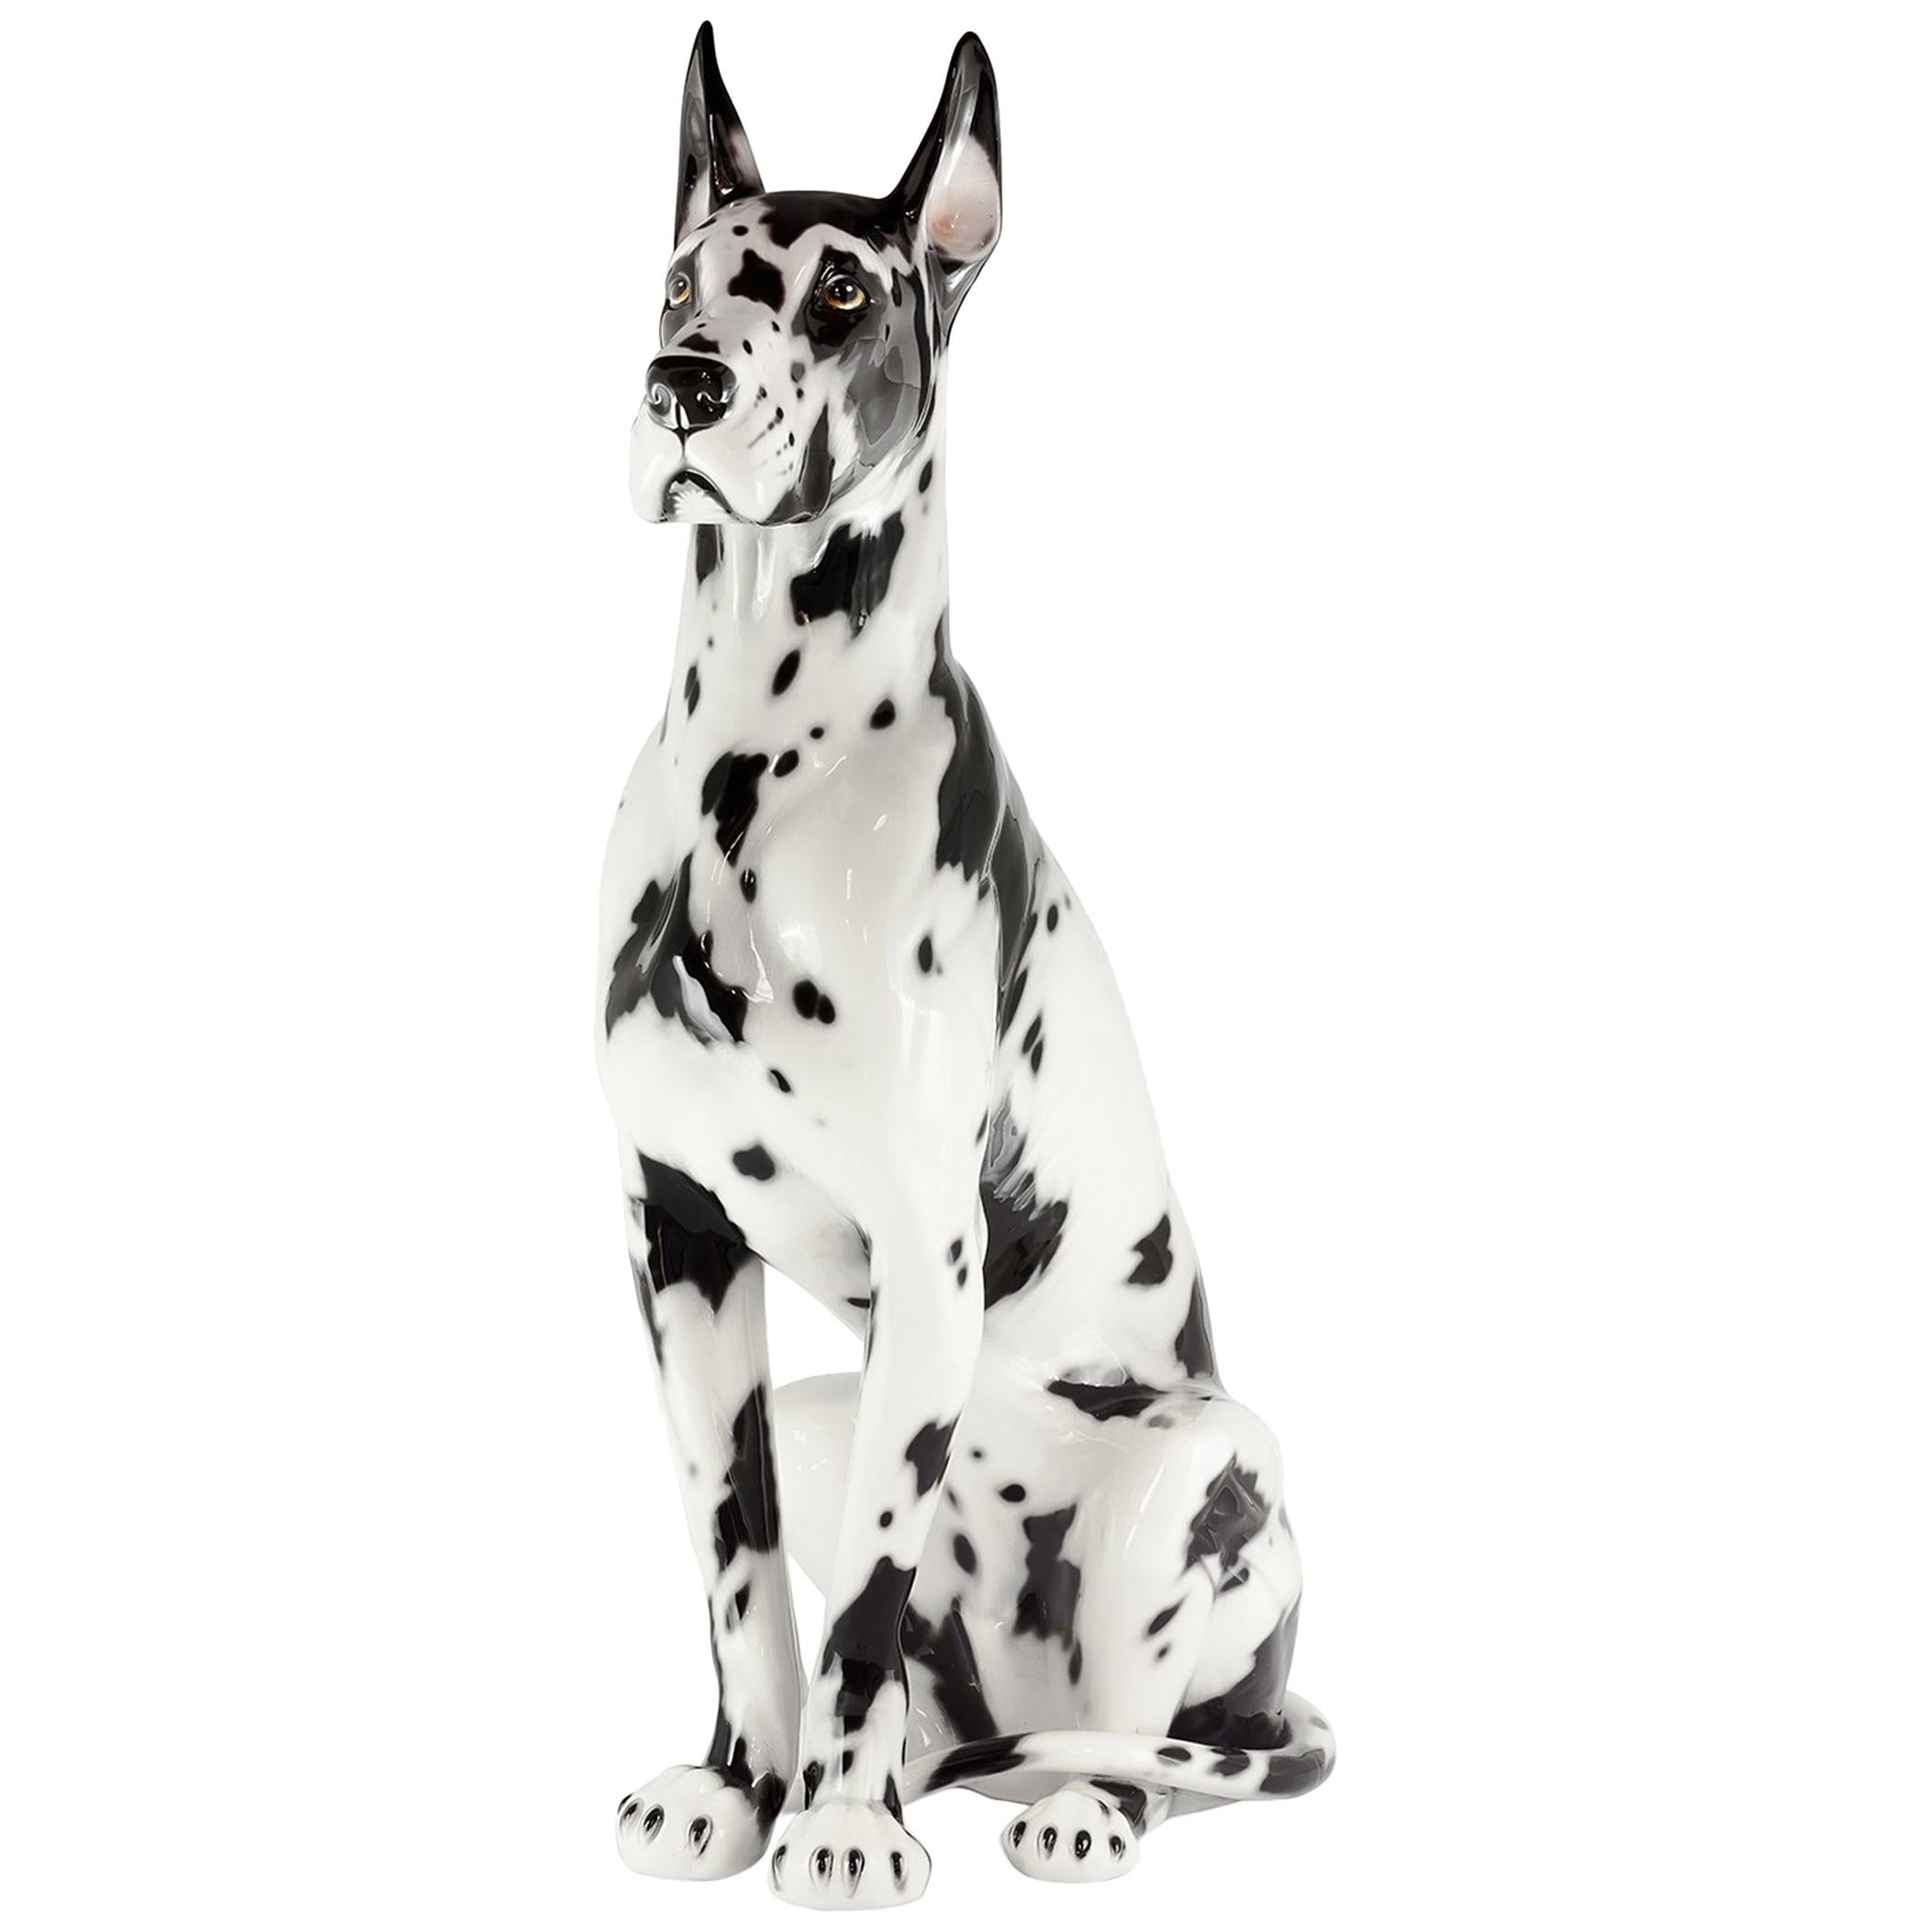 Danish Dog Sculpture For Sale